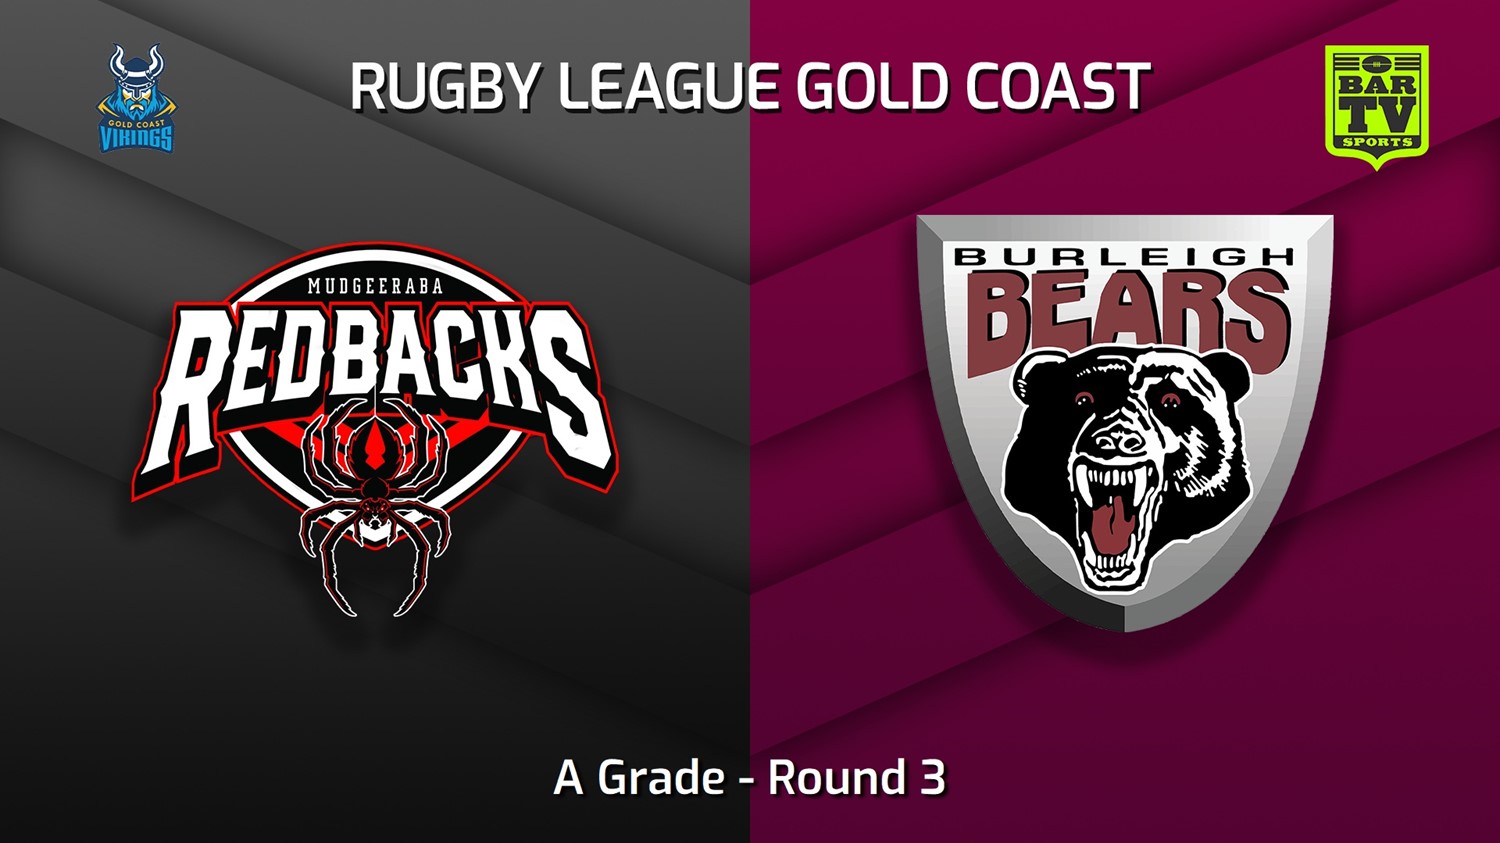 220625-Gold Coast Round 3 - A Grade - Mudgeeraba Redbacks v Burleigh Bears Slate Image